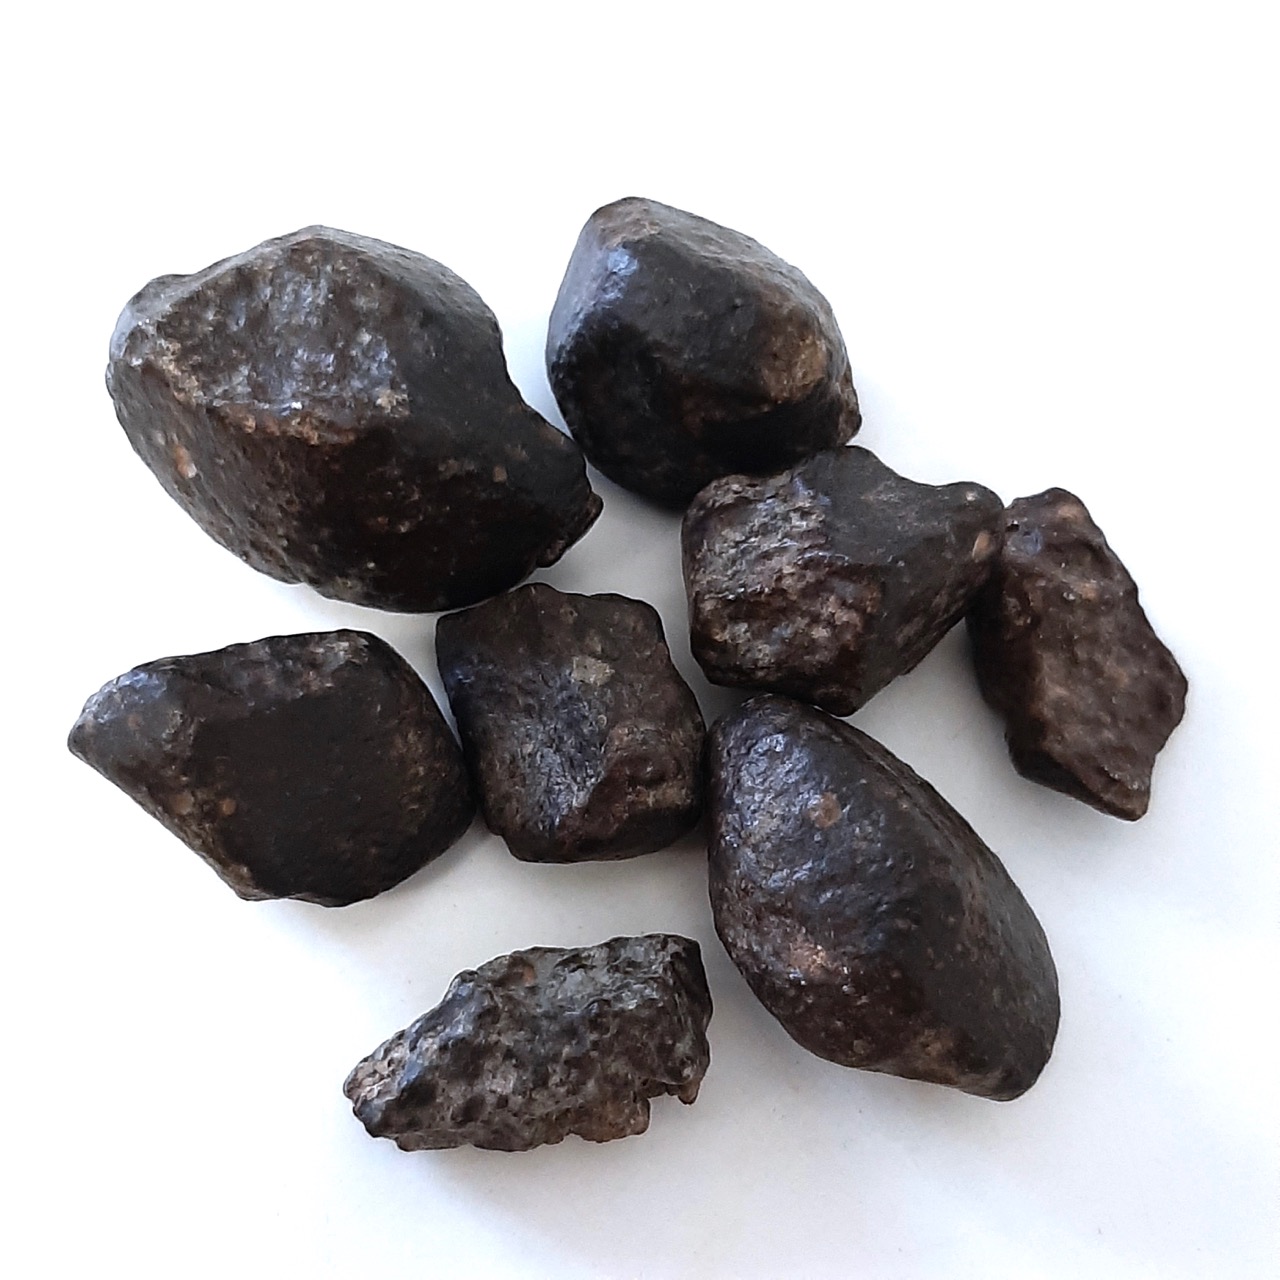 NWA 869 meteorite. L3-6 chondrite. Lot.